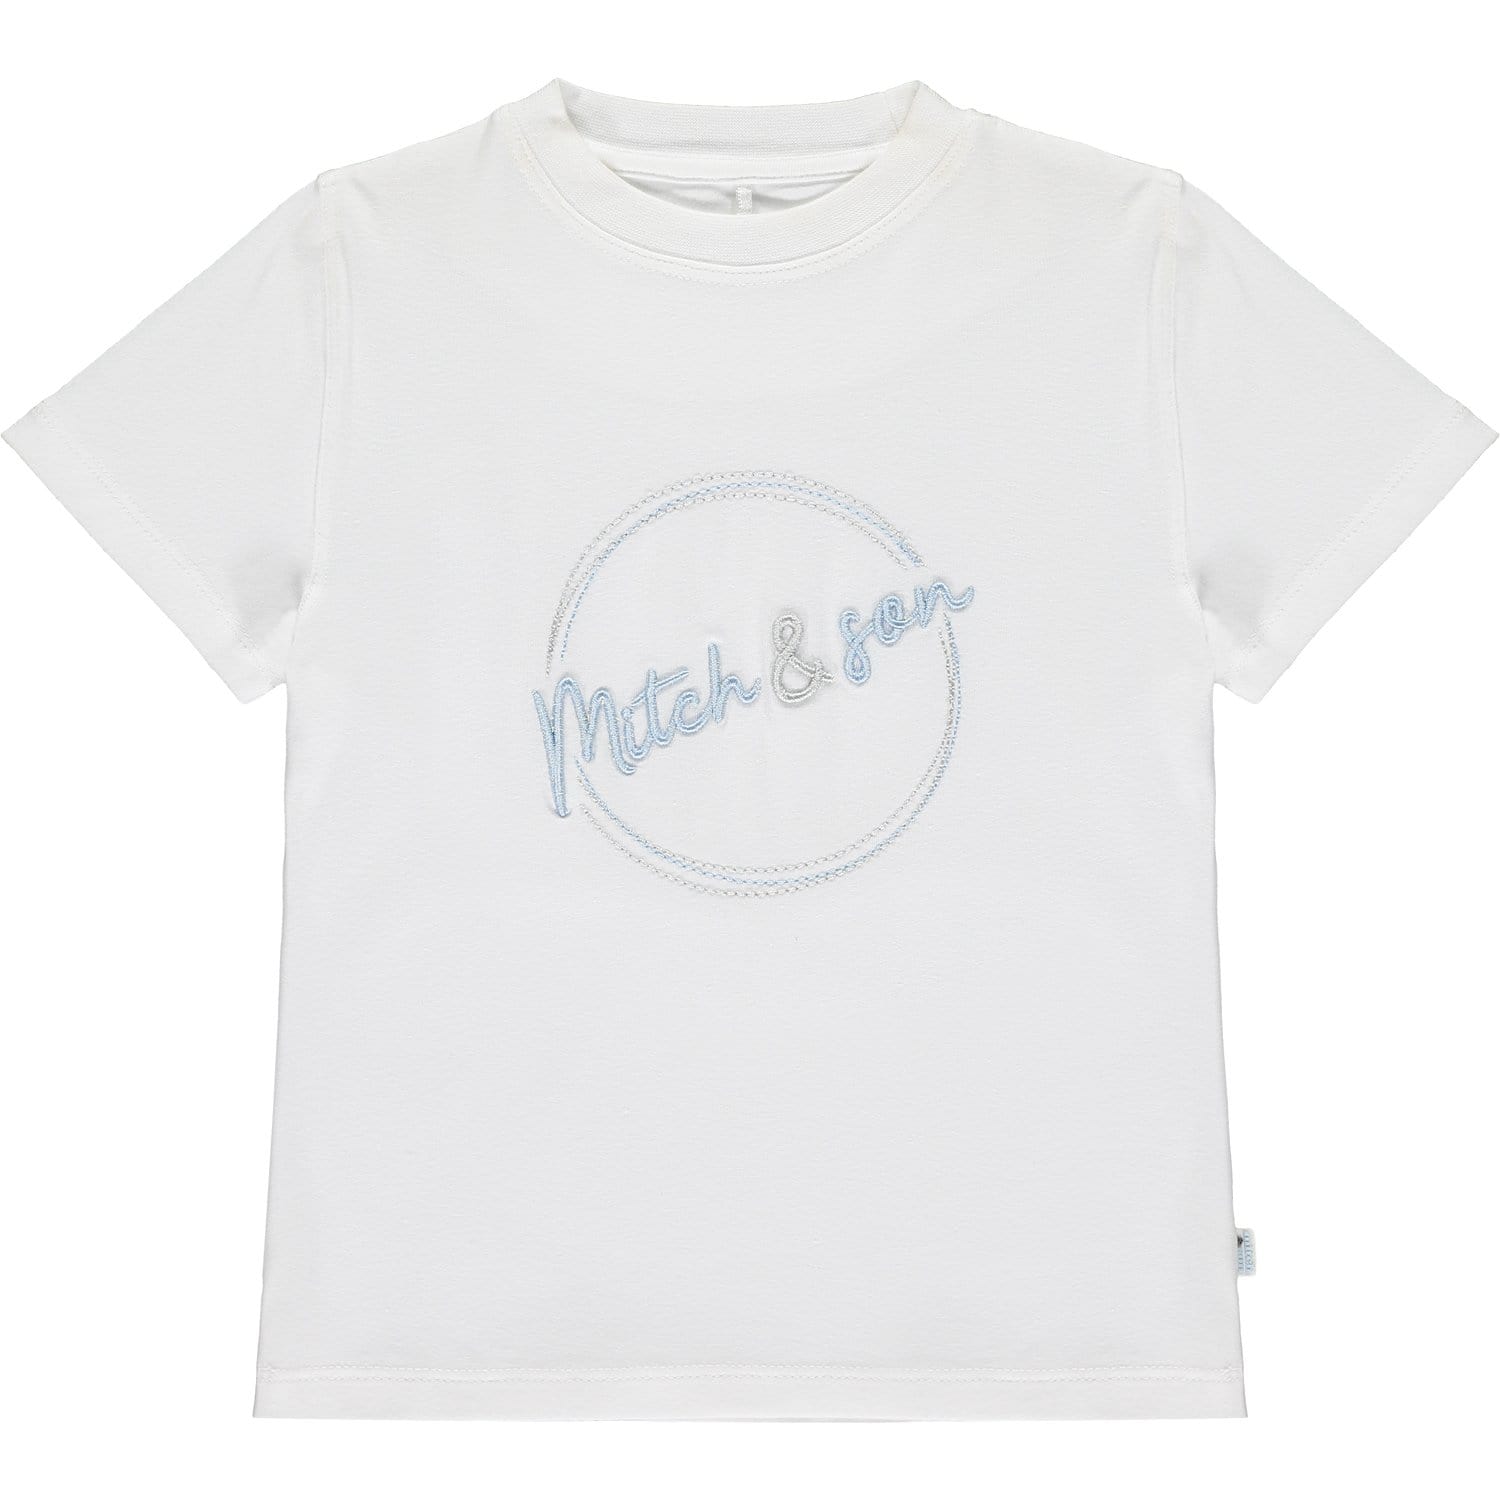 MITCH & SON - Abel Signature T Shirt - White